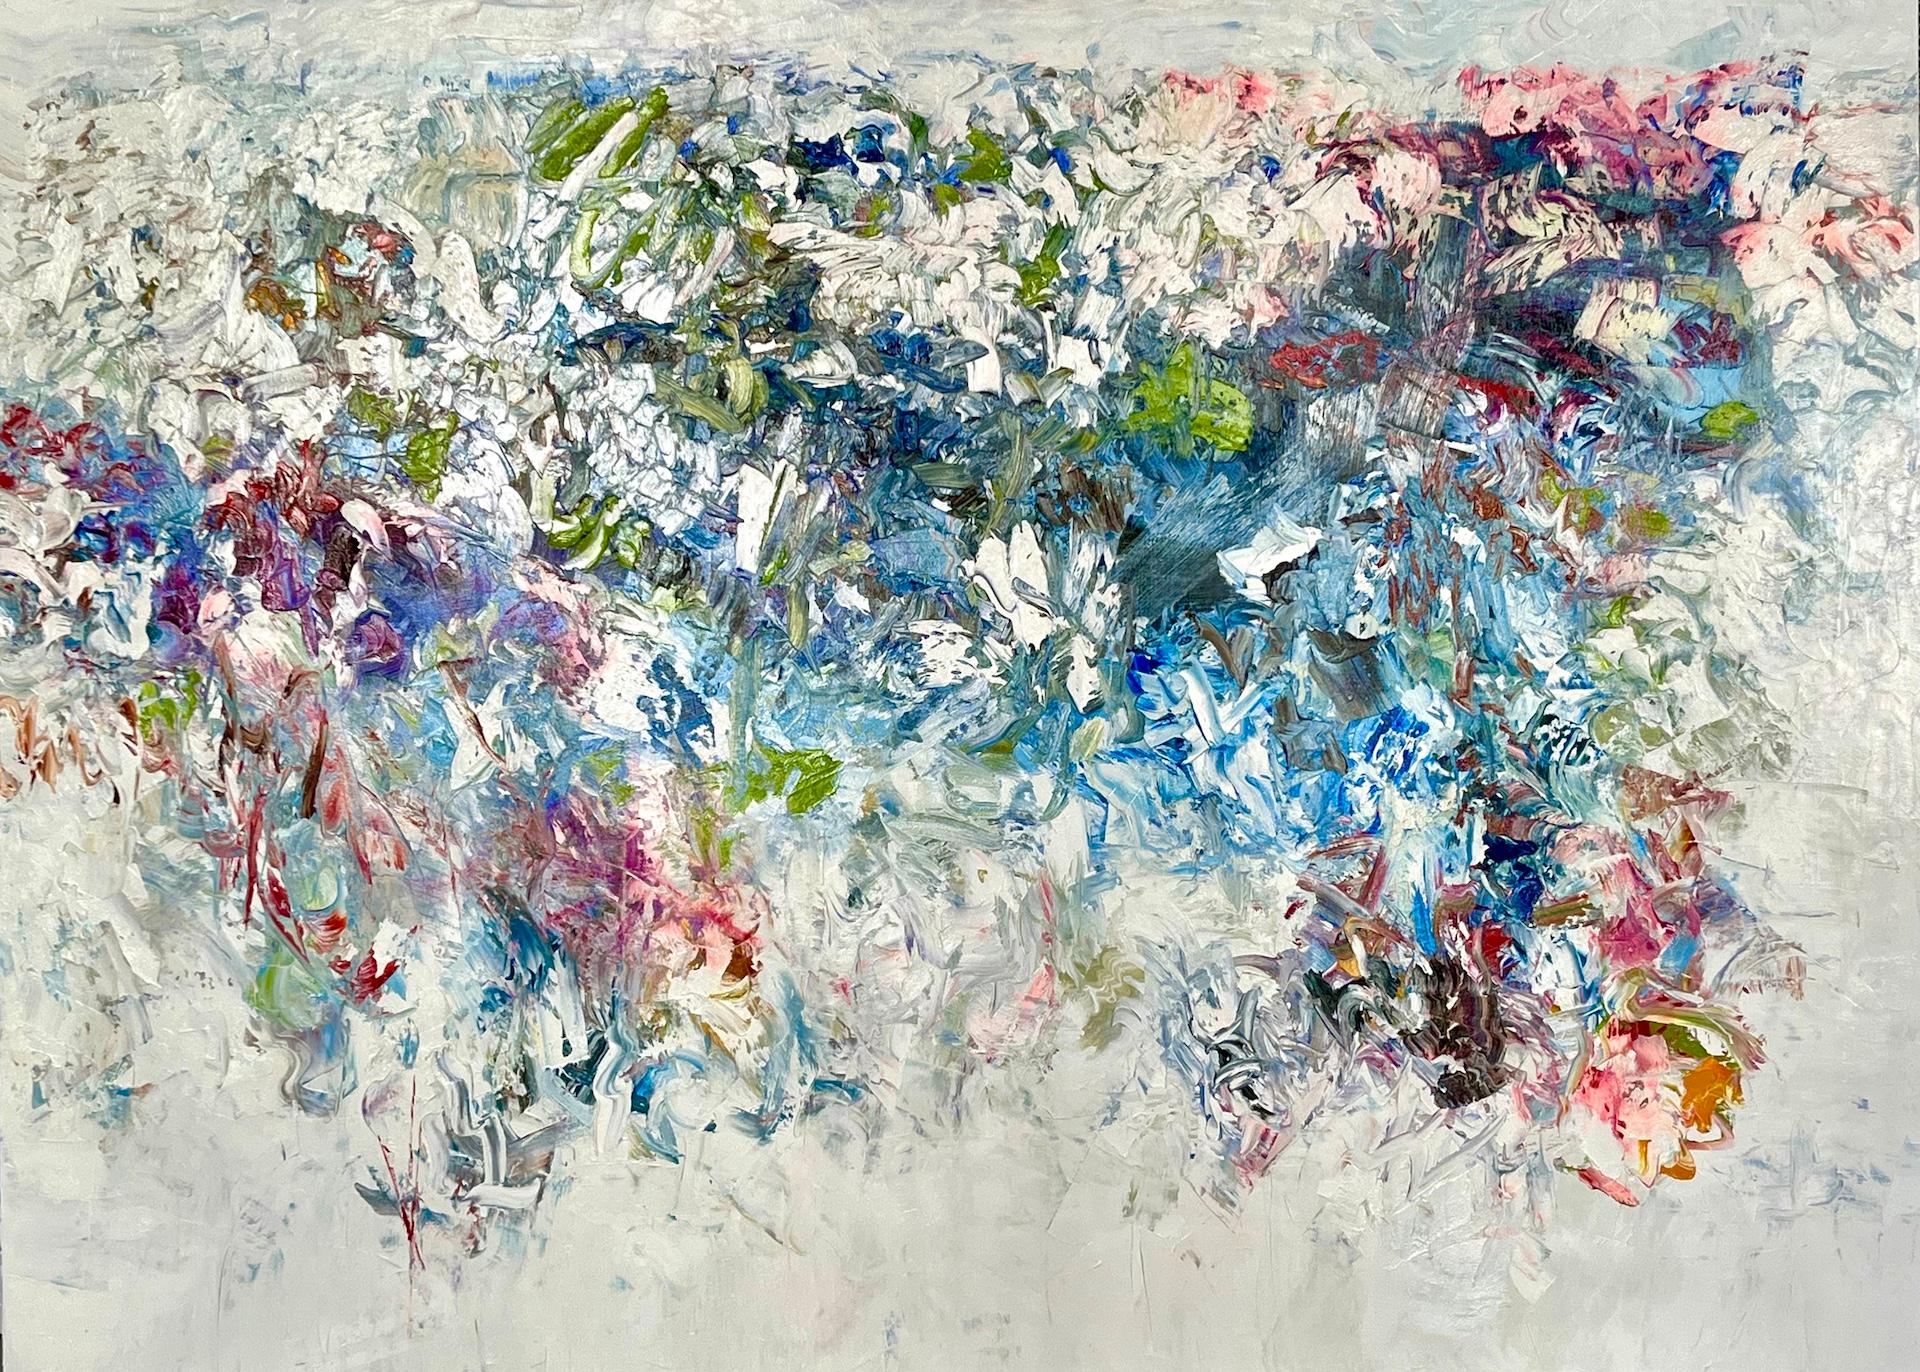 Abstract Painting Chris Hayman - Chemin à travers les herbes